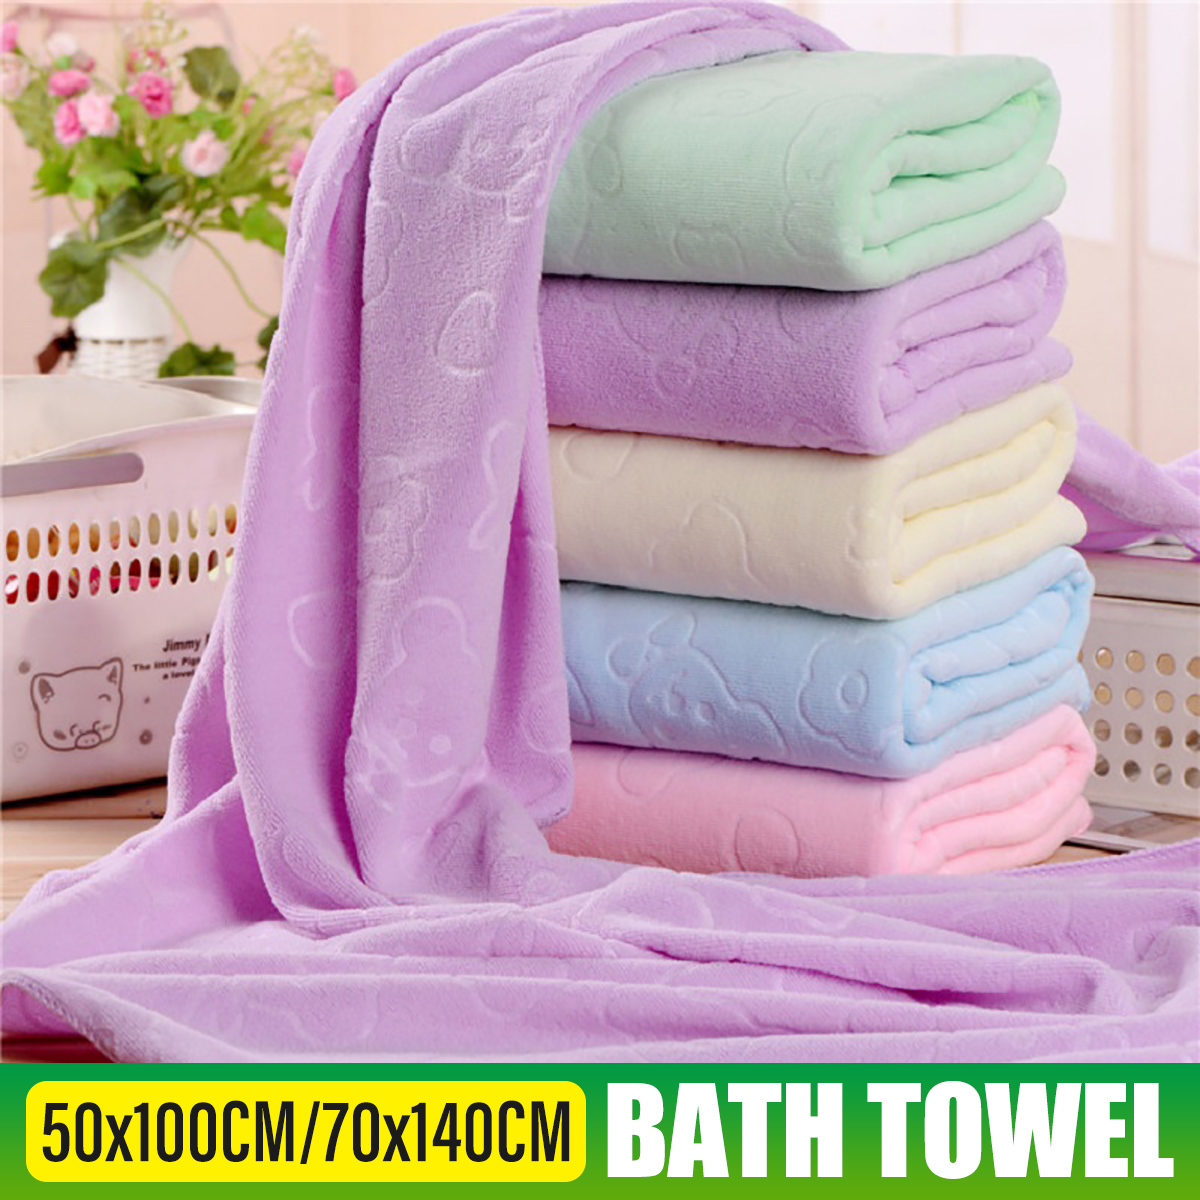 Microfiber-Towel-Bath-Towel-Gym-Sport-Footy-Travel-Camping-Swimming-Beach-Towel-1676923-2